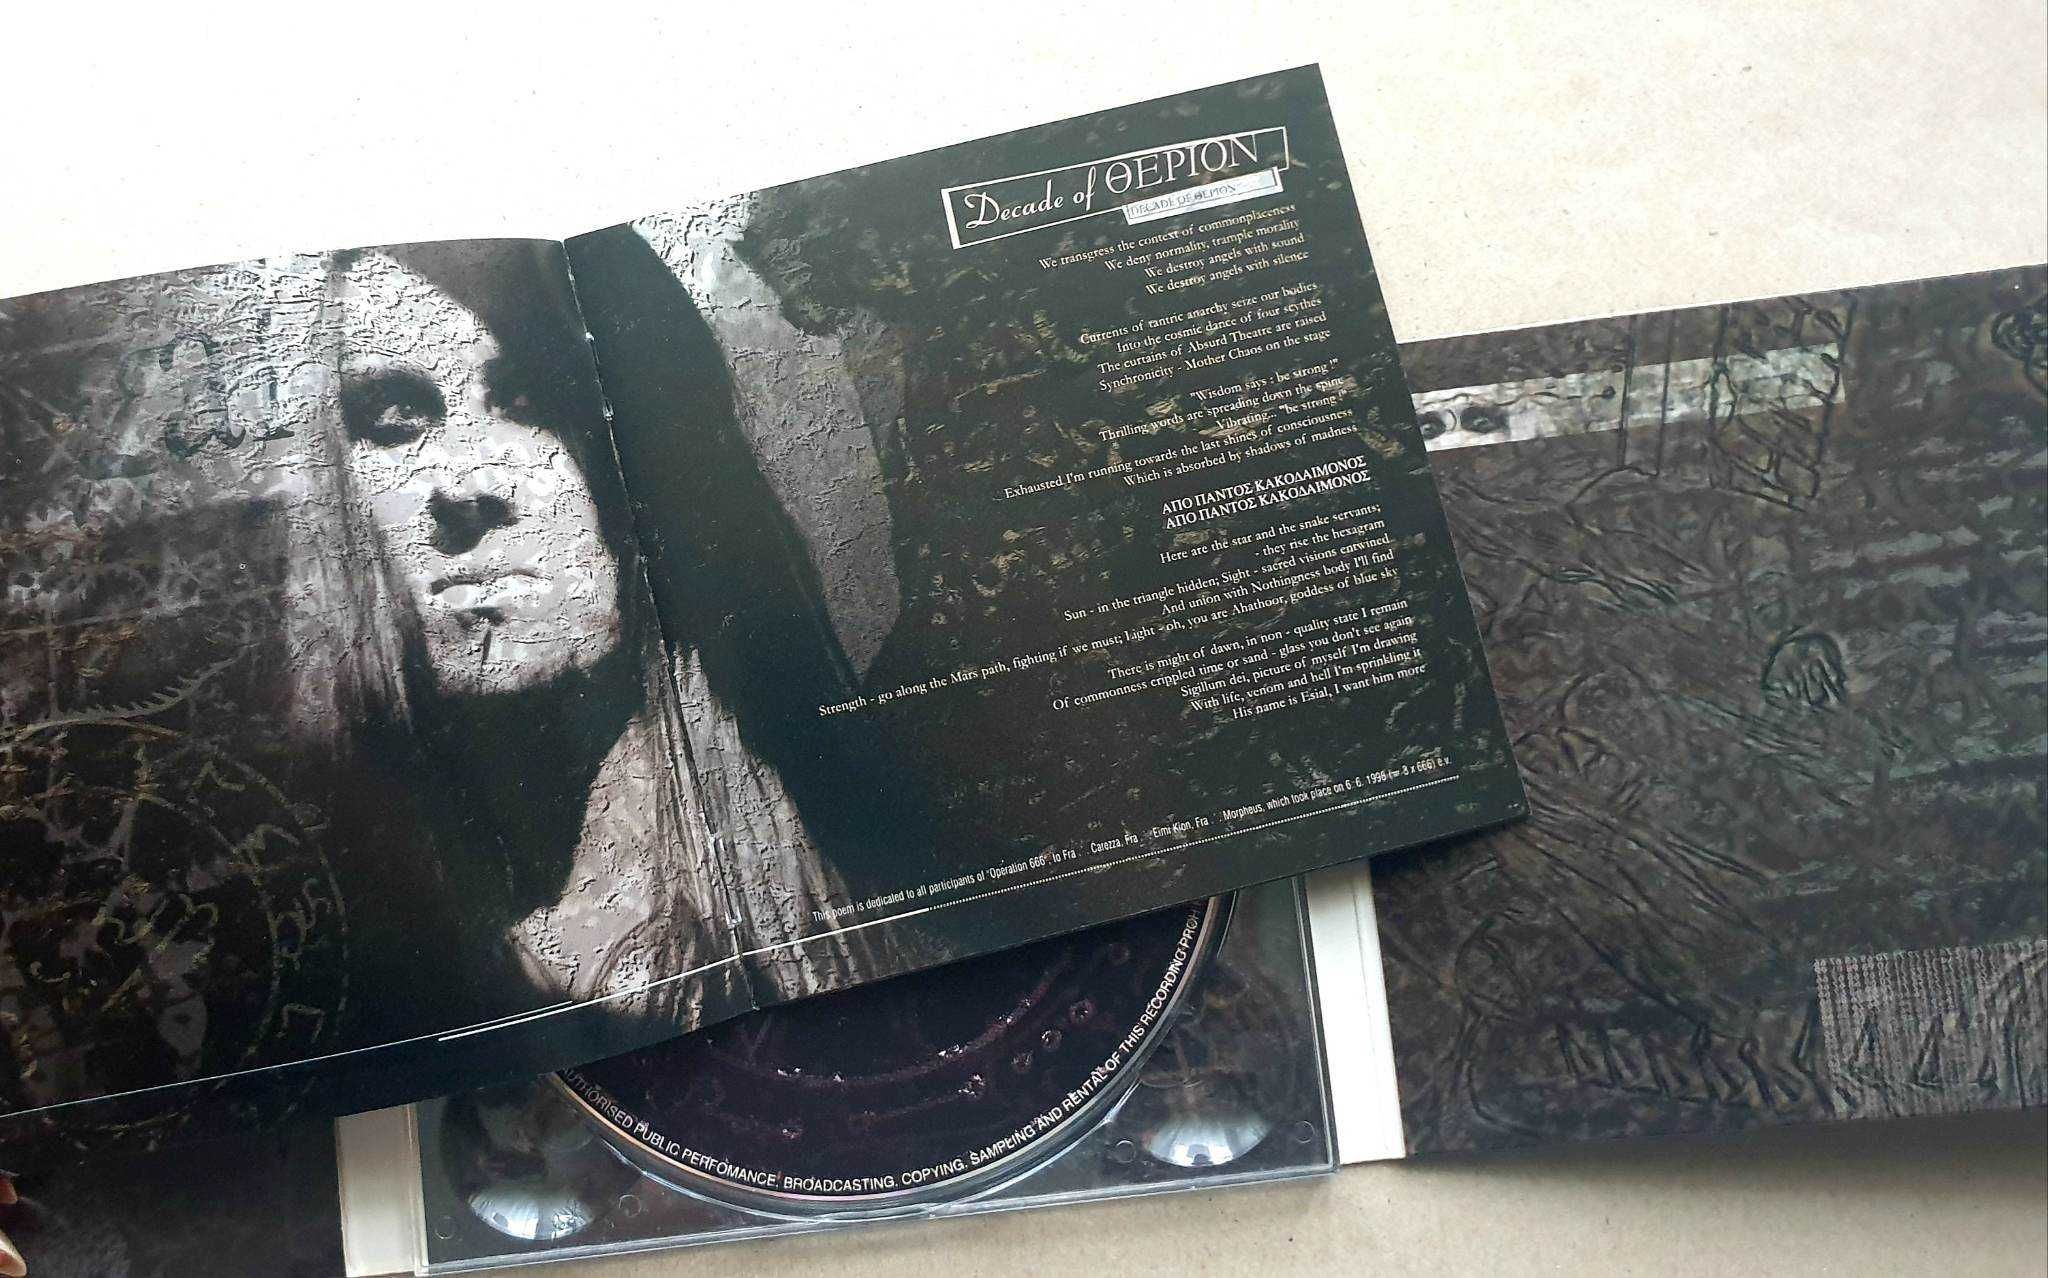 Betemoth Satanica Metal Mind Records CD rock metal